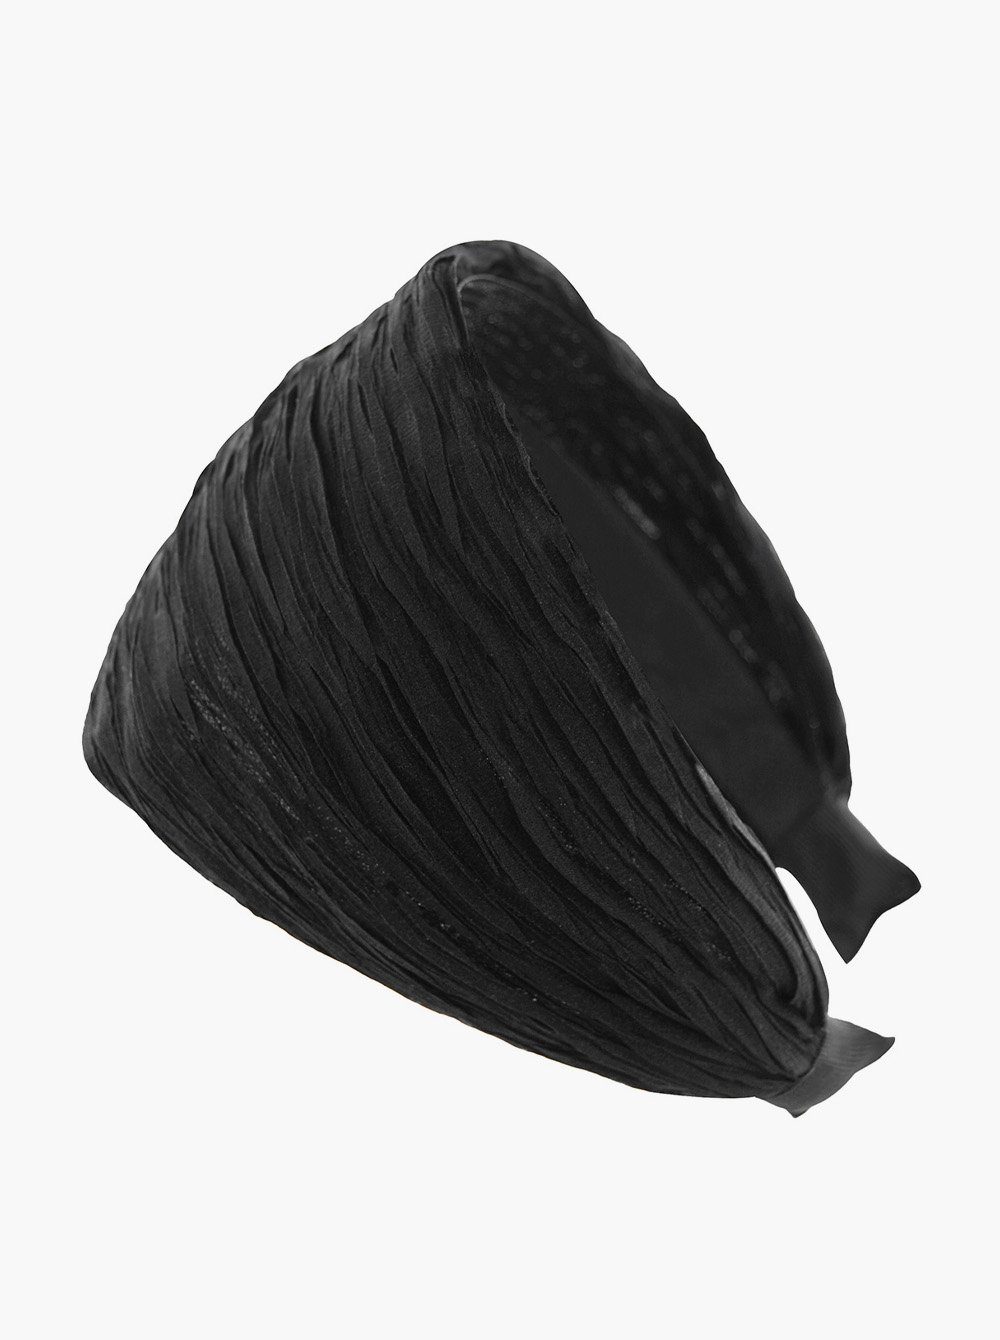 axy Haarreif Breiter Haarreif in Tuchoptik Wunderschön, Damen Breiter Haarreif (Plissierter Stoff) Haarband Haarreifen